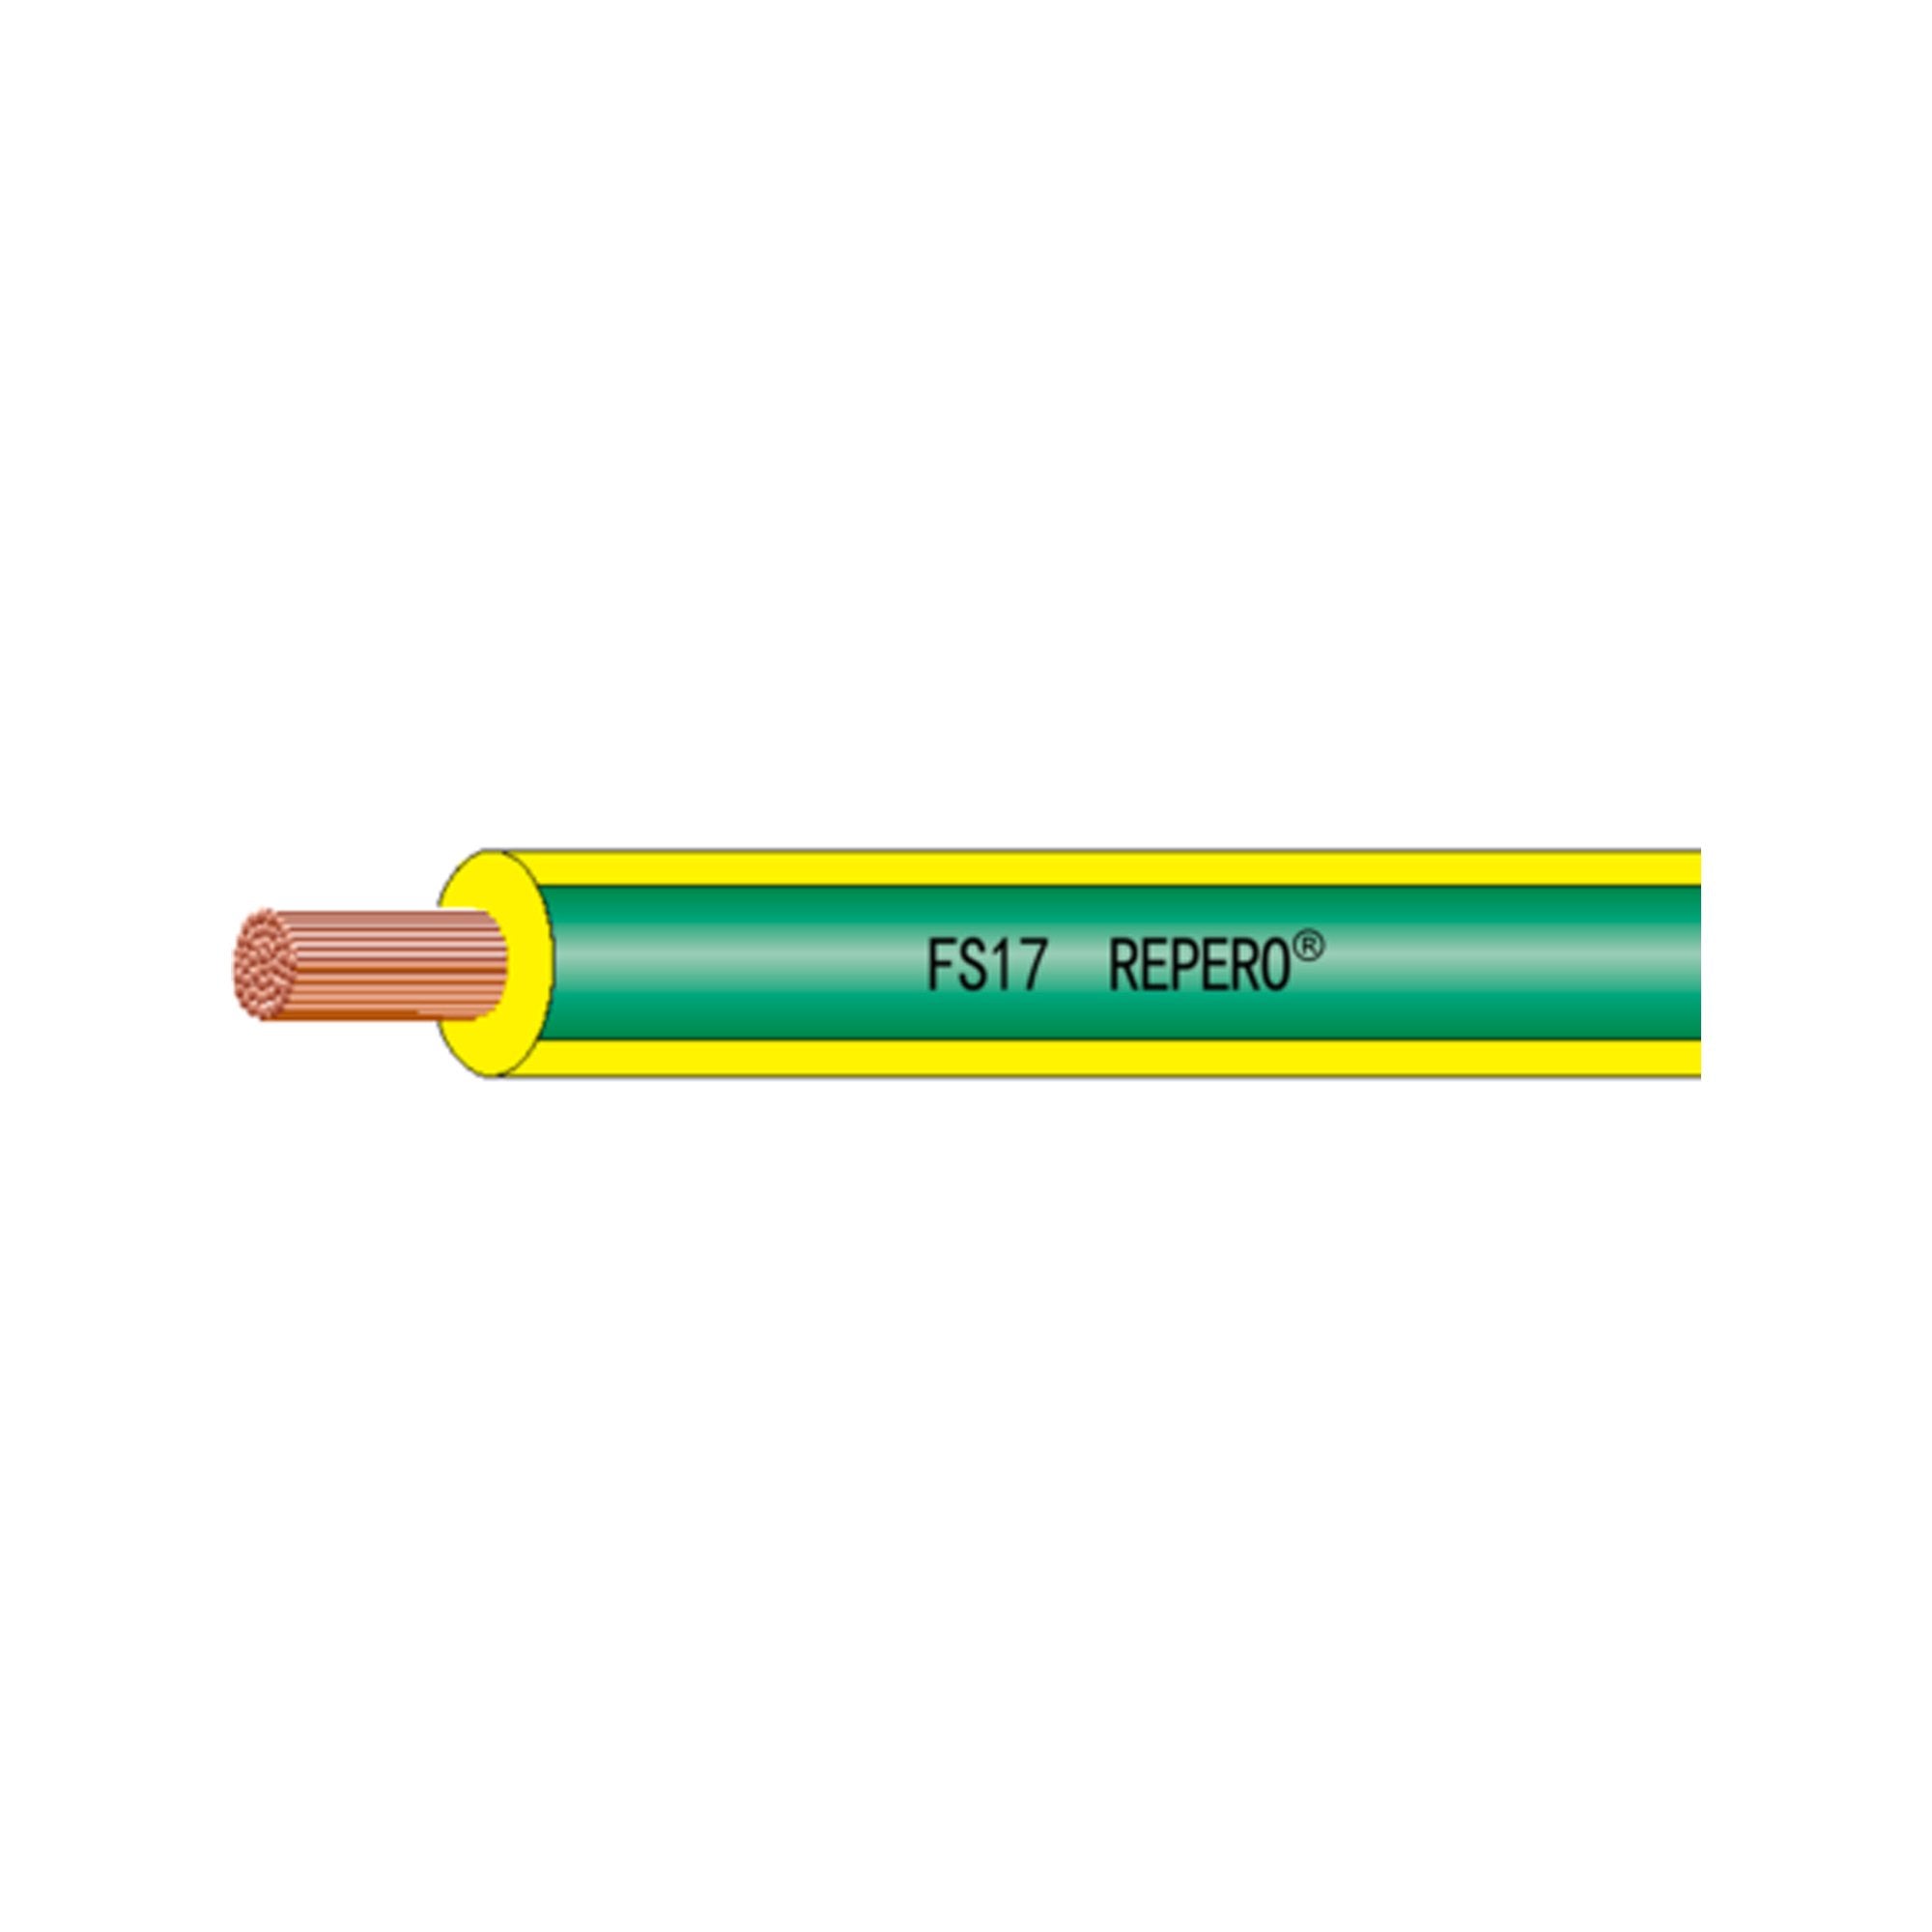 Câble Électrique Baldassari 1,5 mmq x 100 m Vert/Jaune